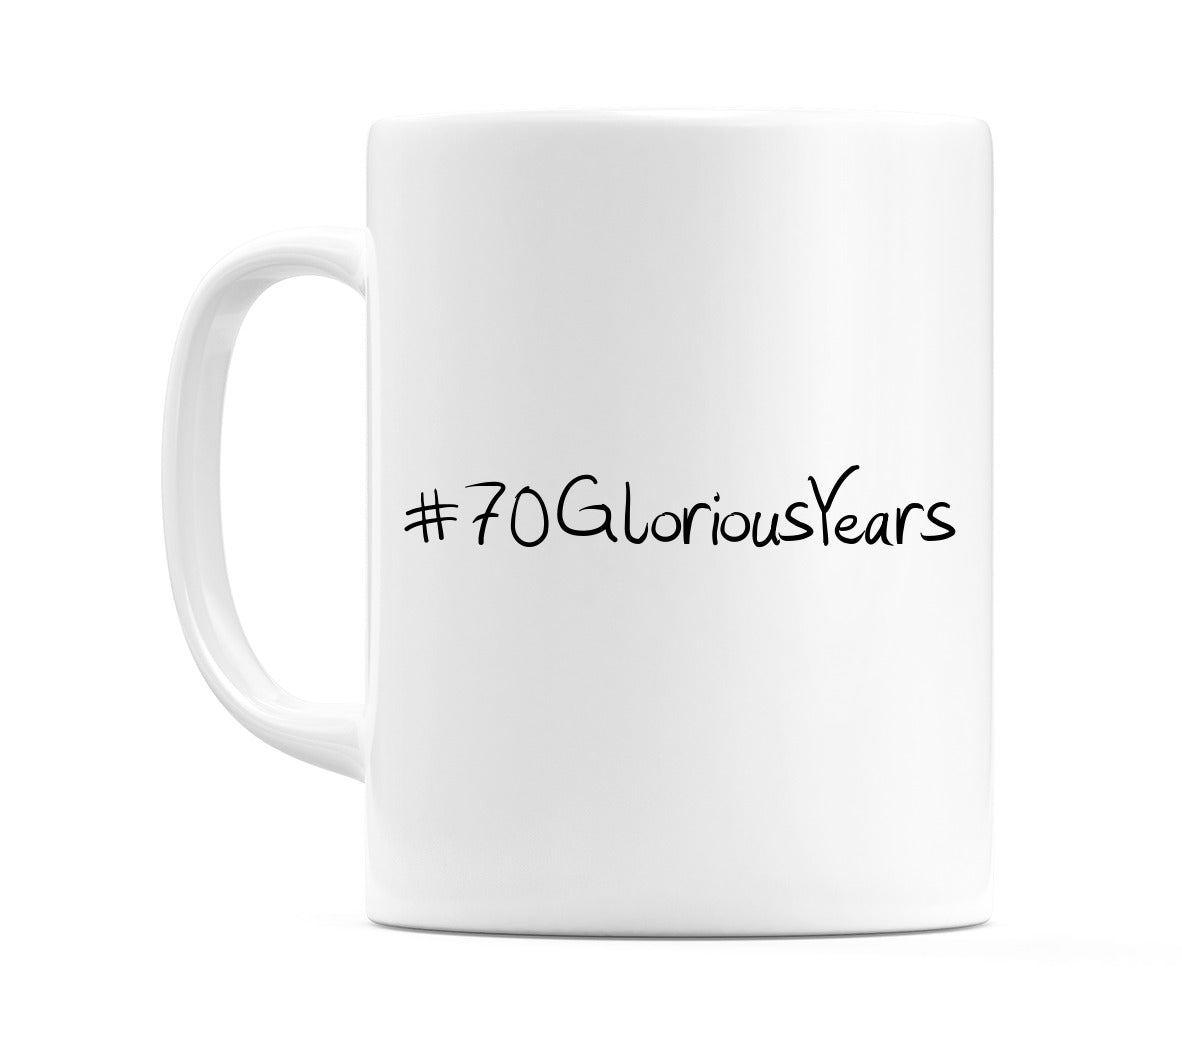 #70GloriousYears Mug